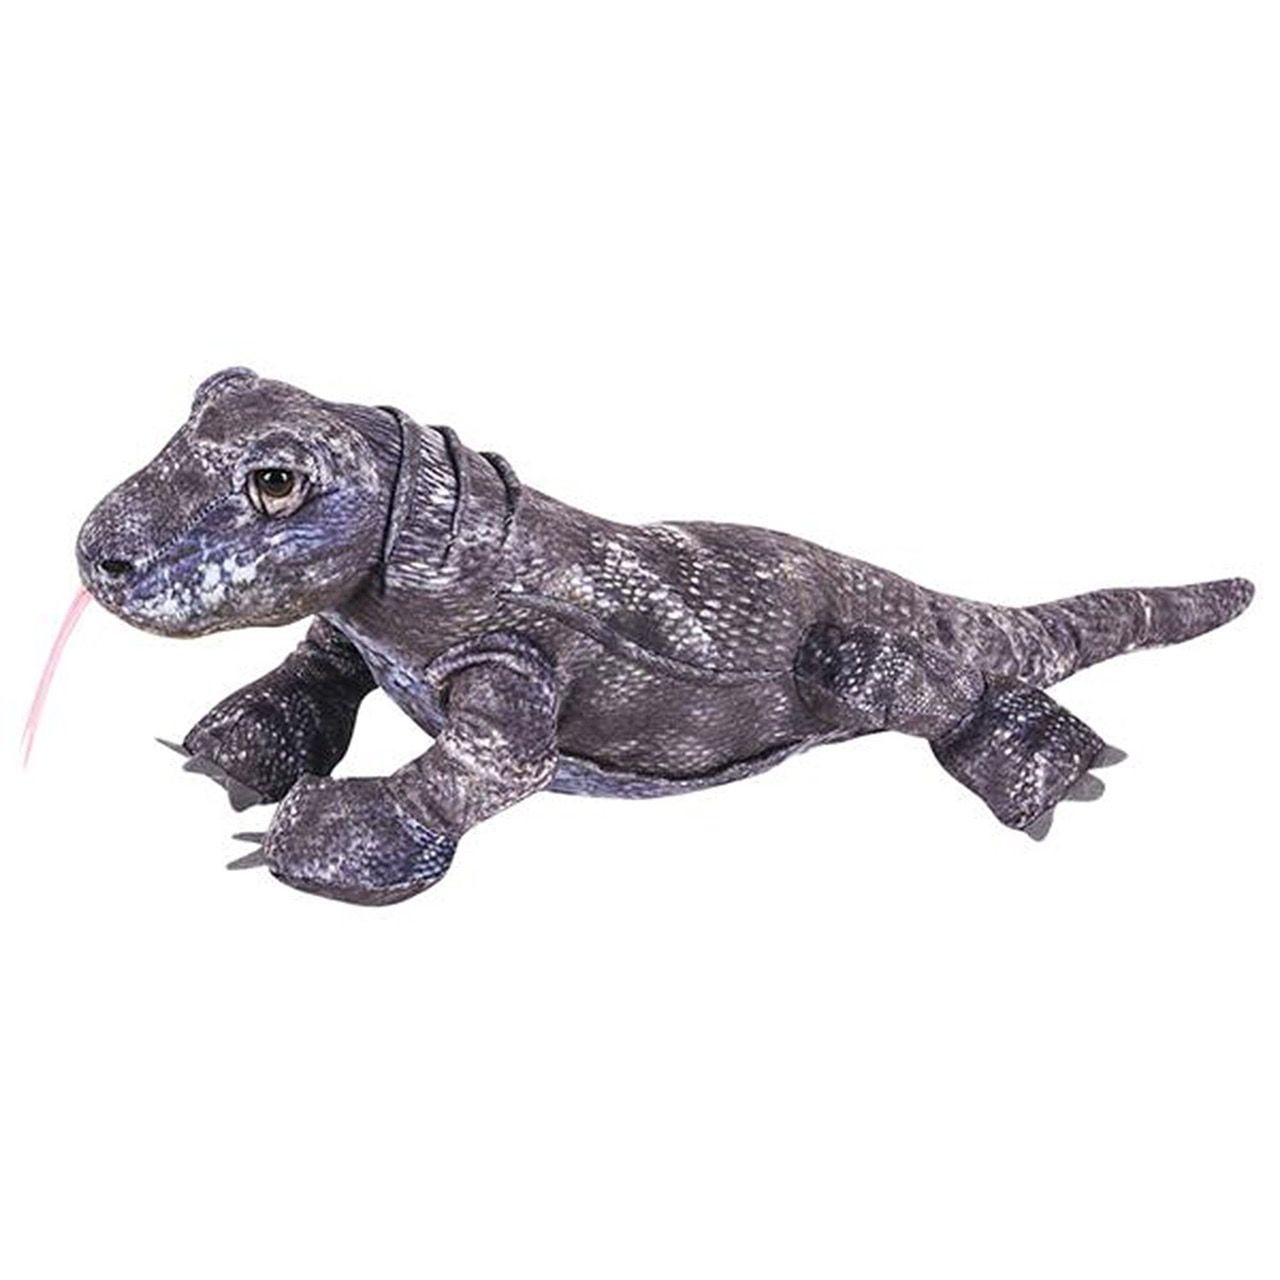 komodo dragon stuffed toy